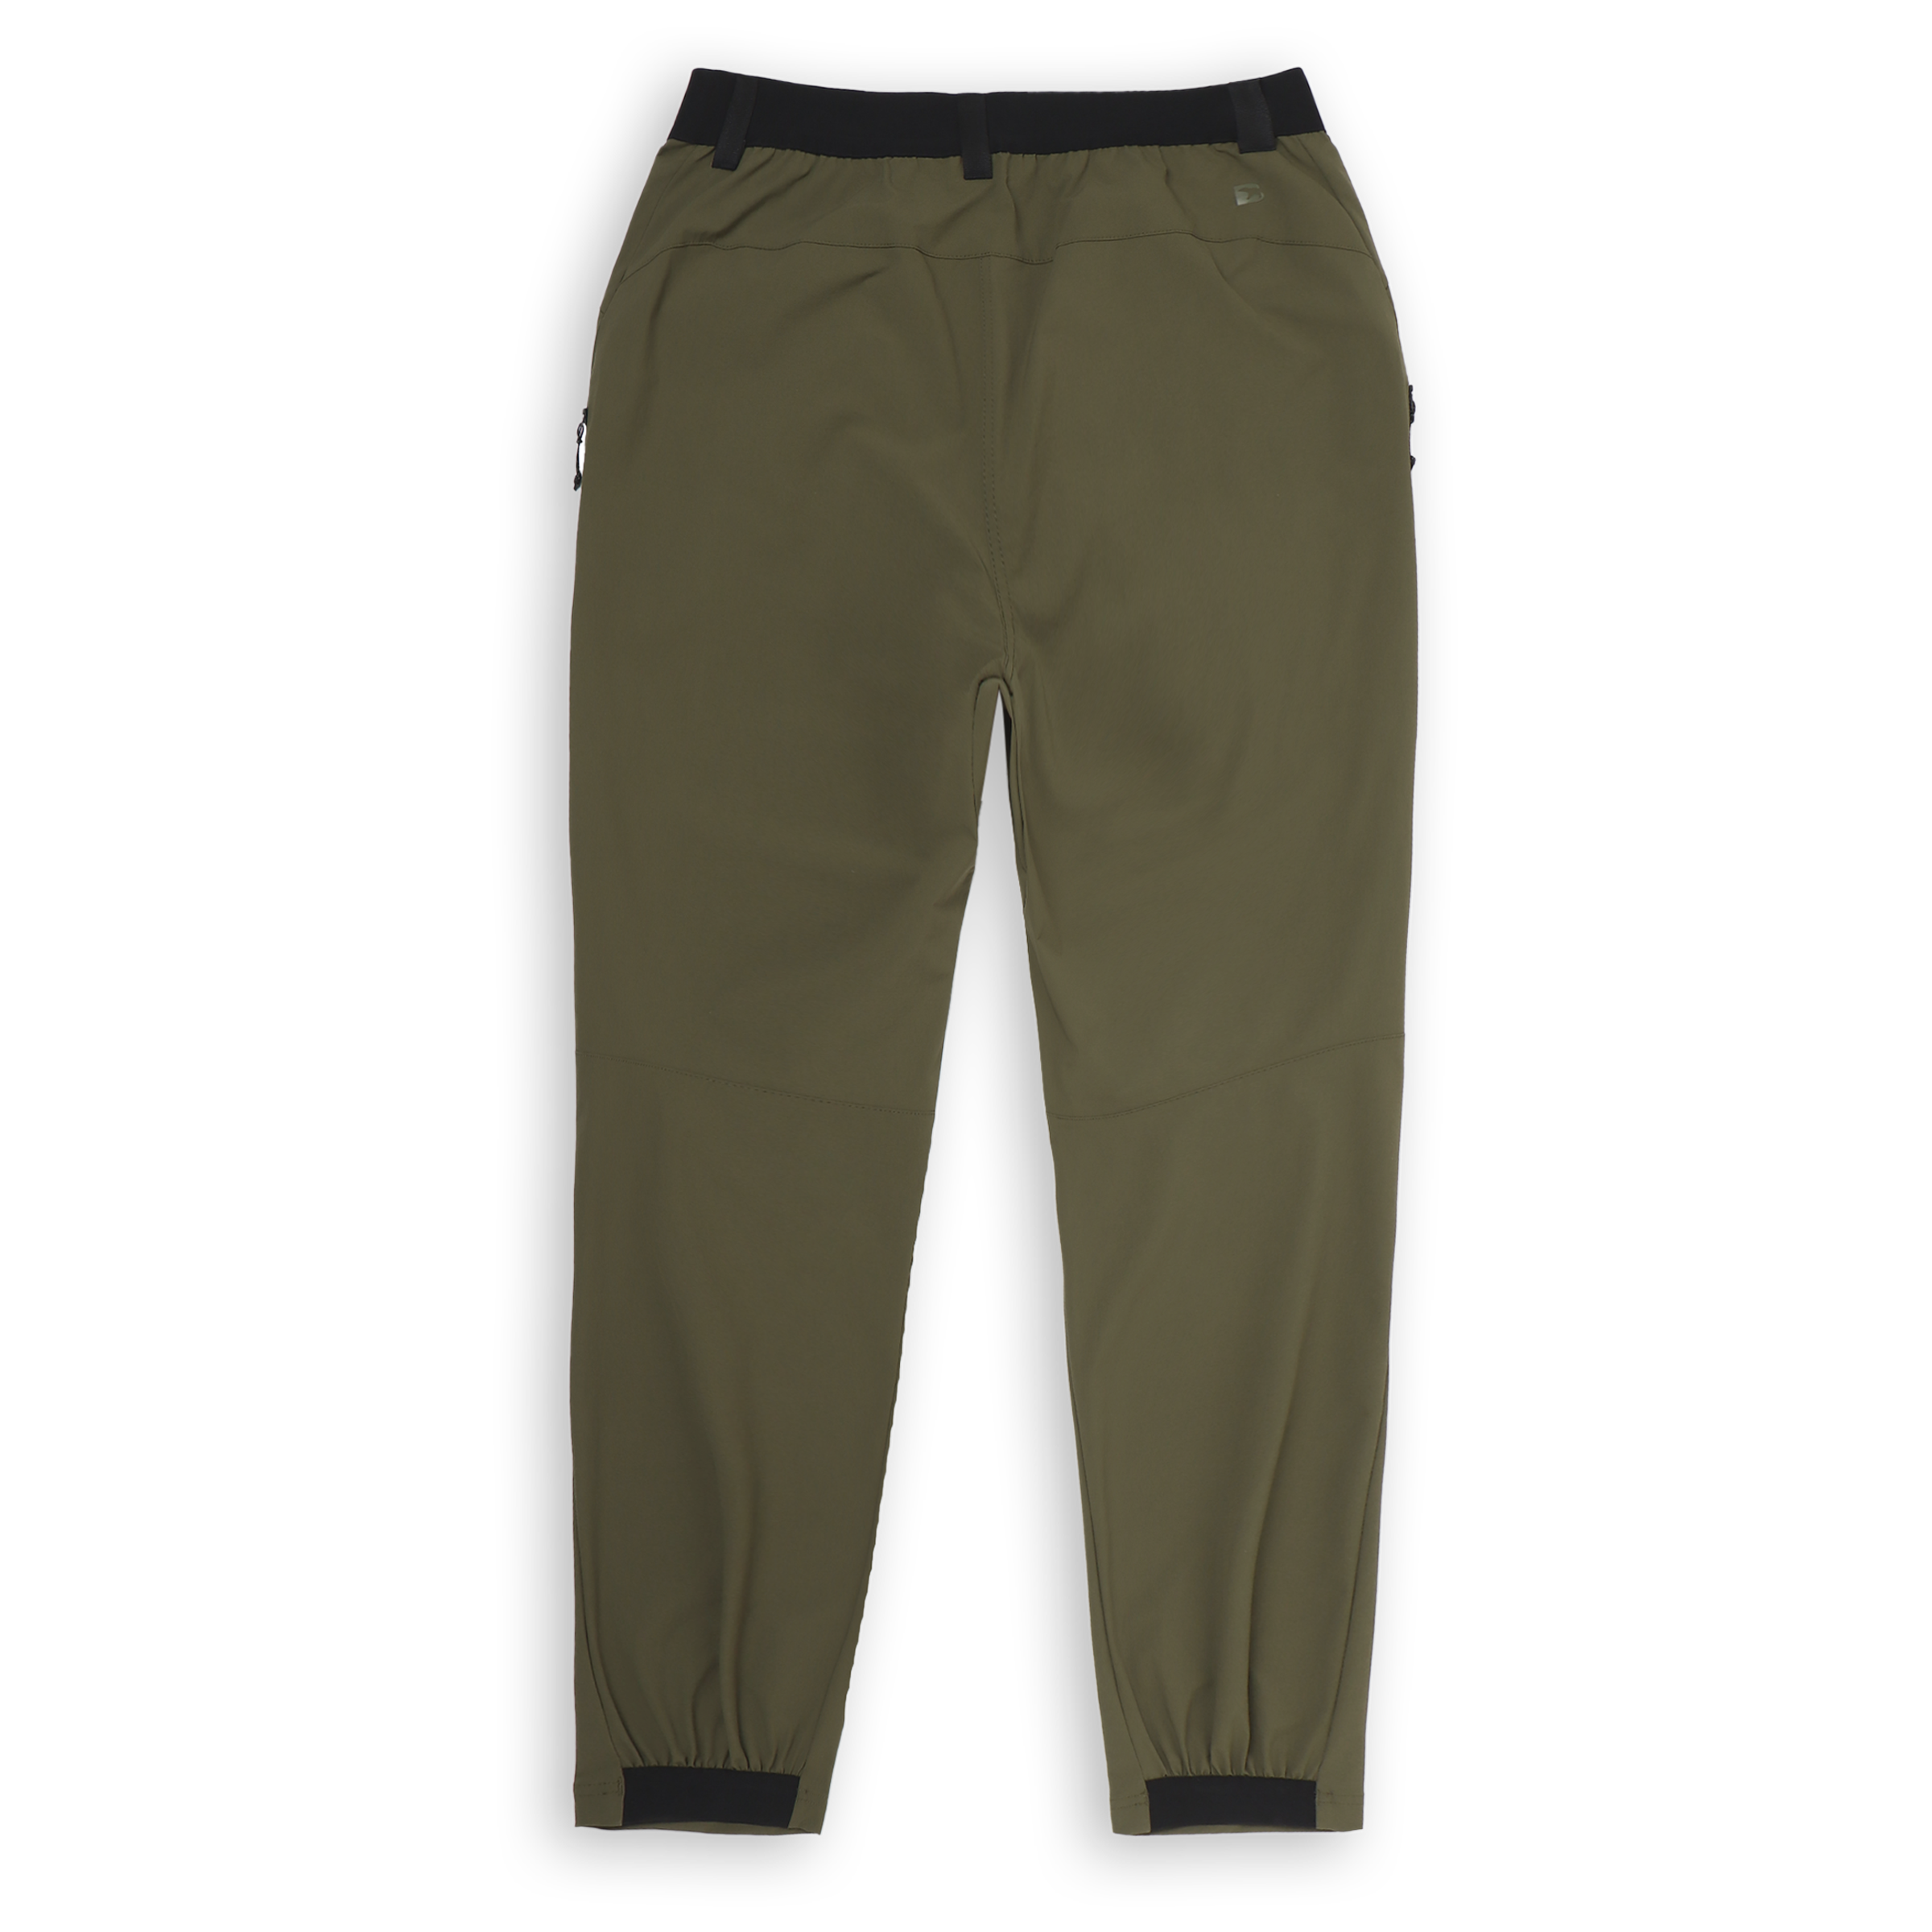 Trail Pant Military Green Back with elastic waistband, belt loops, and back ankle elastic hem